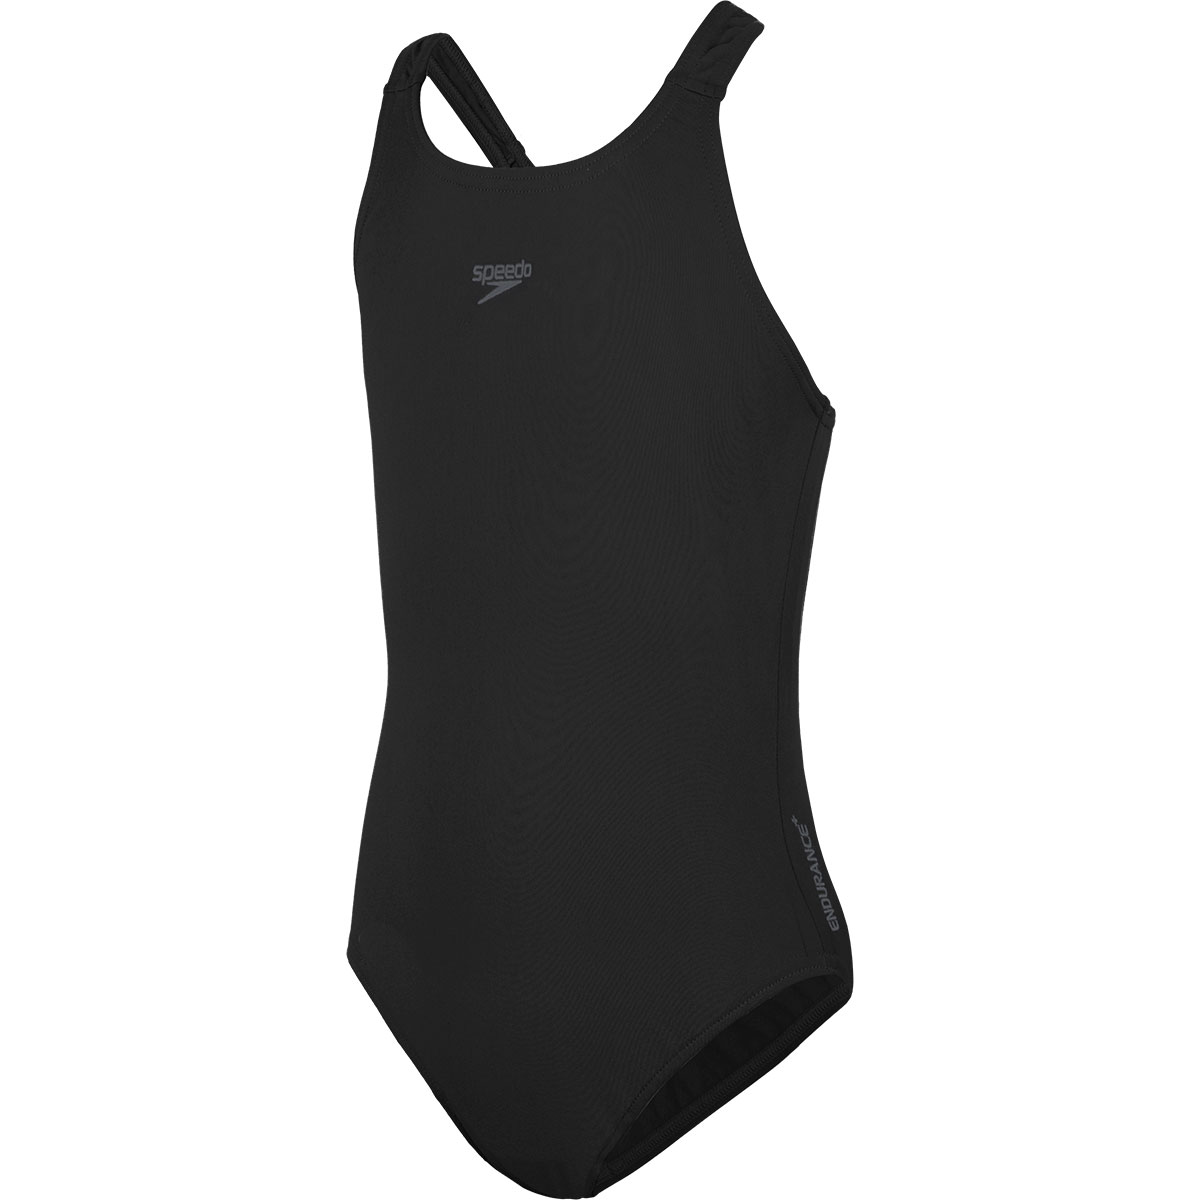 Image of Speedo Girl's Essential Endurance+ Medalist Swimsuit - black